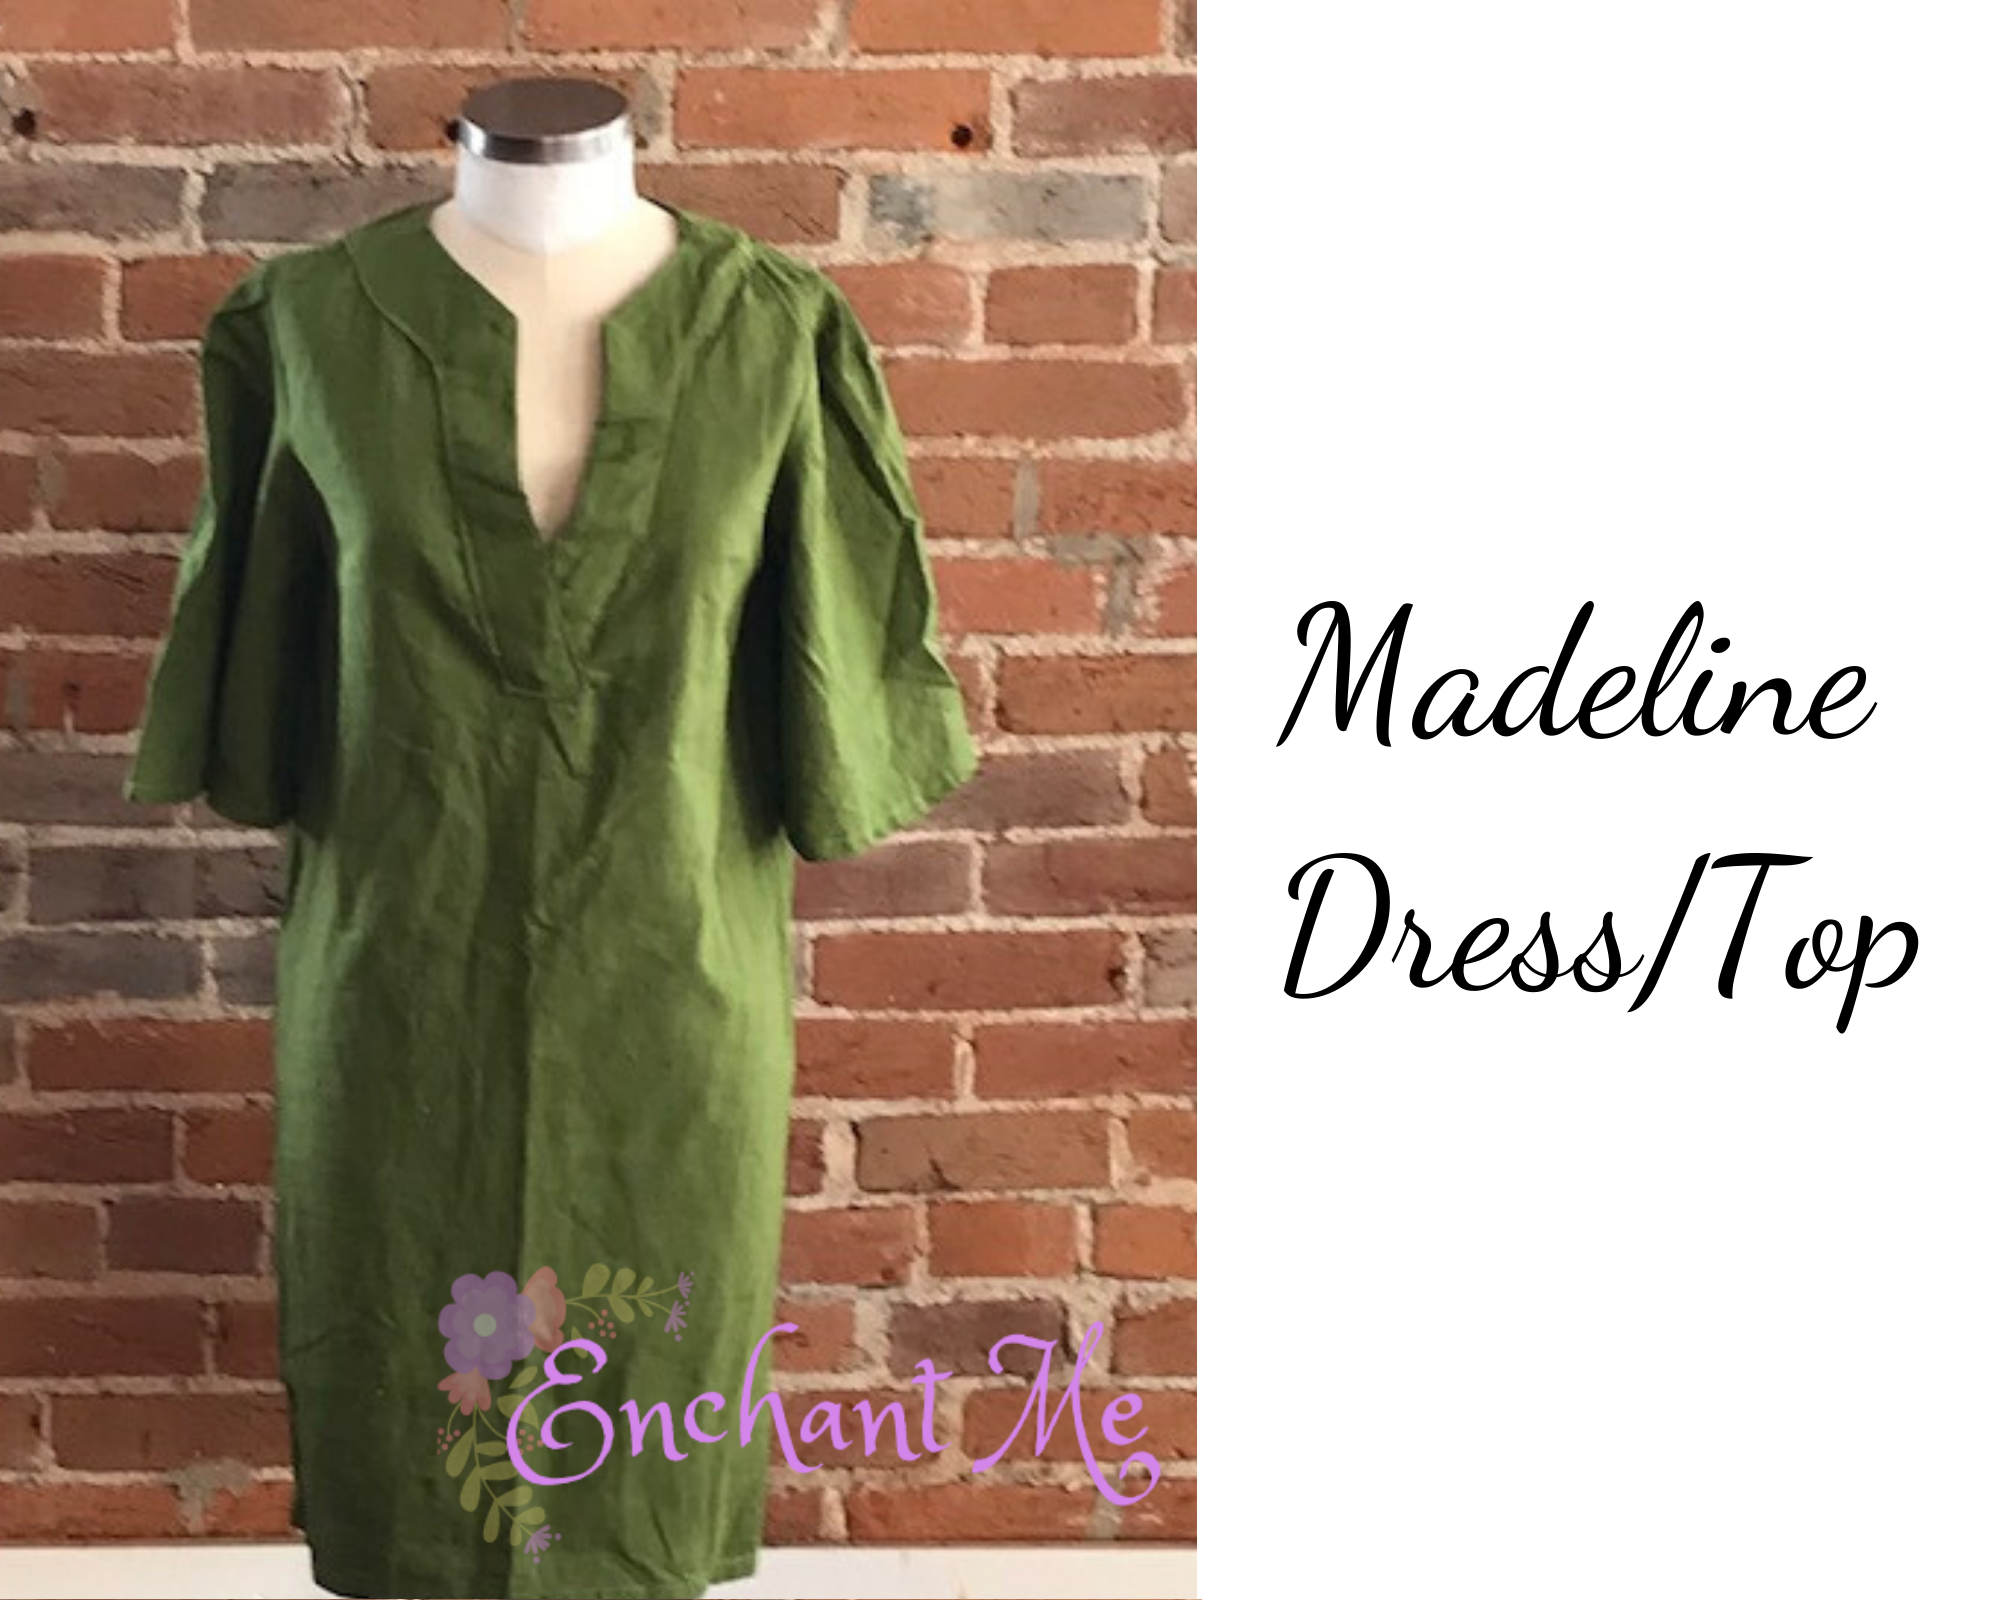 Madeline Dress/Top